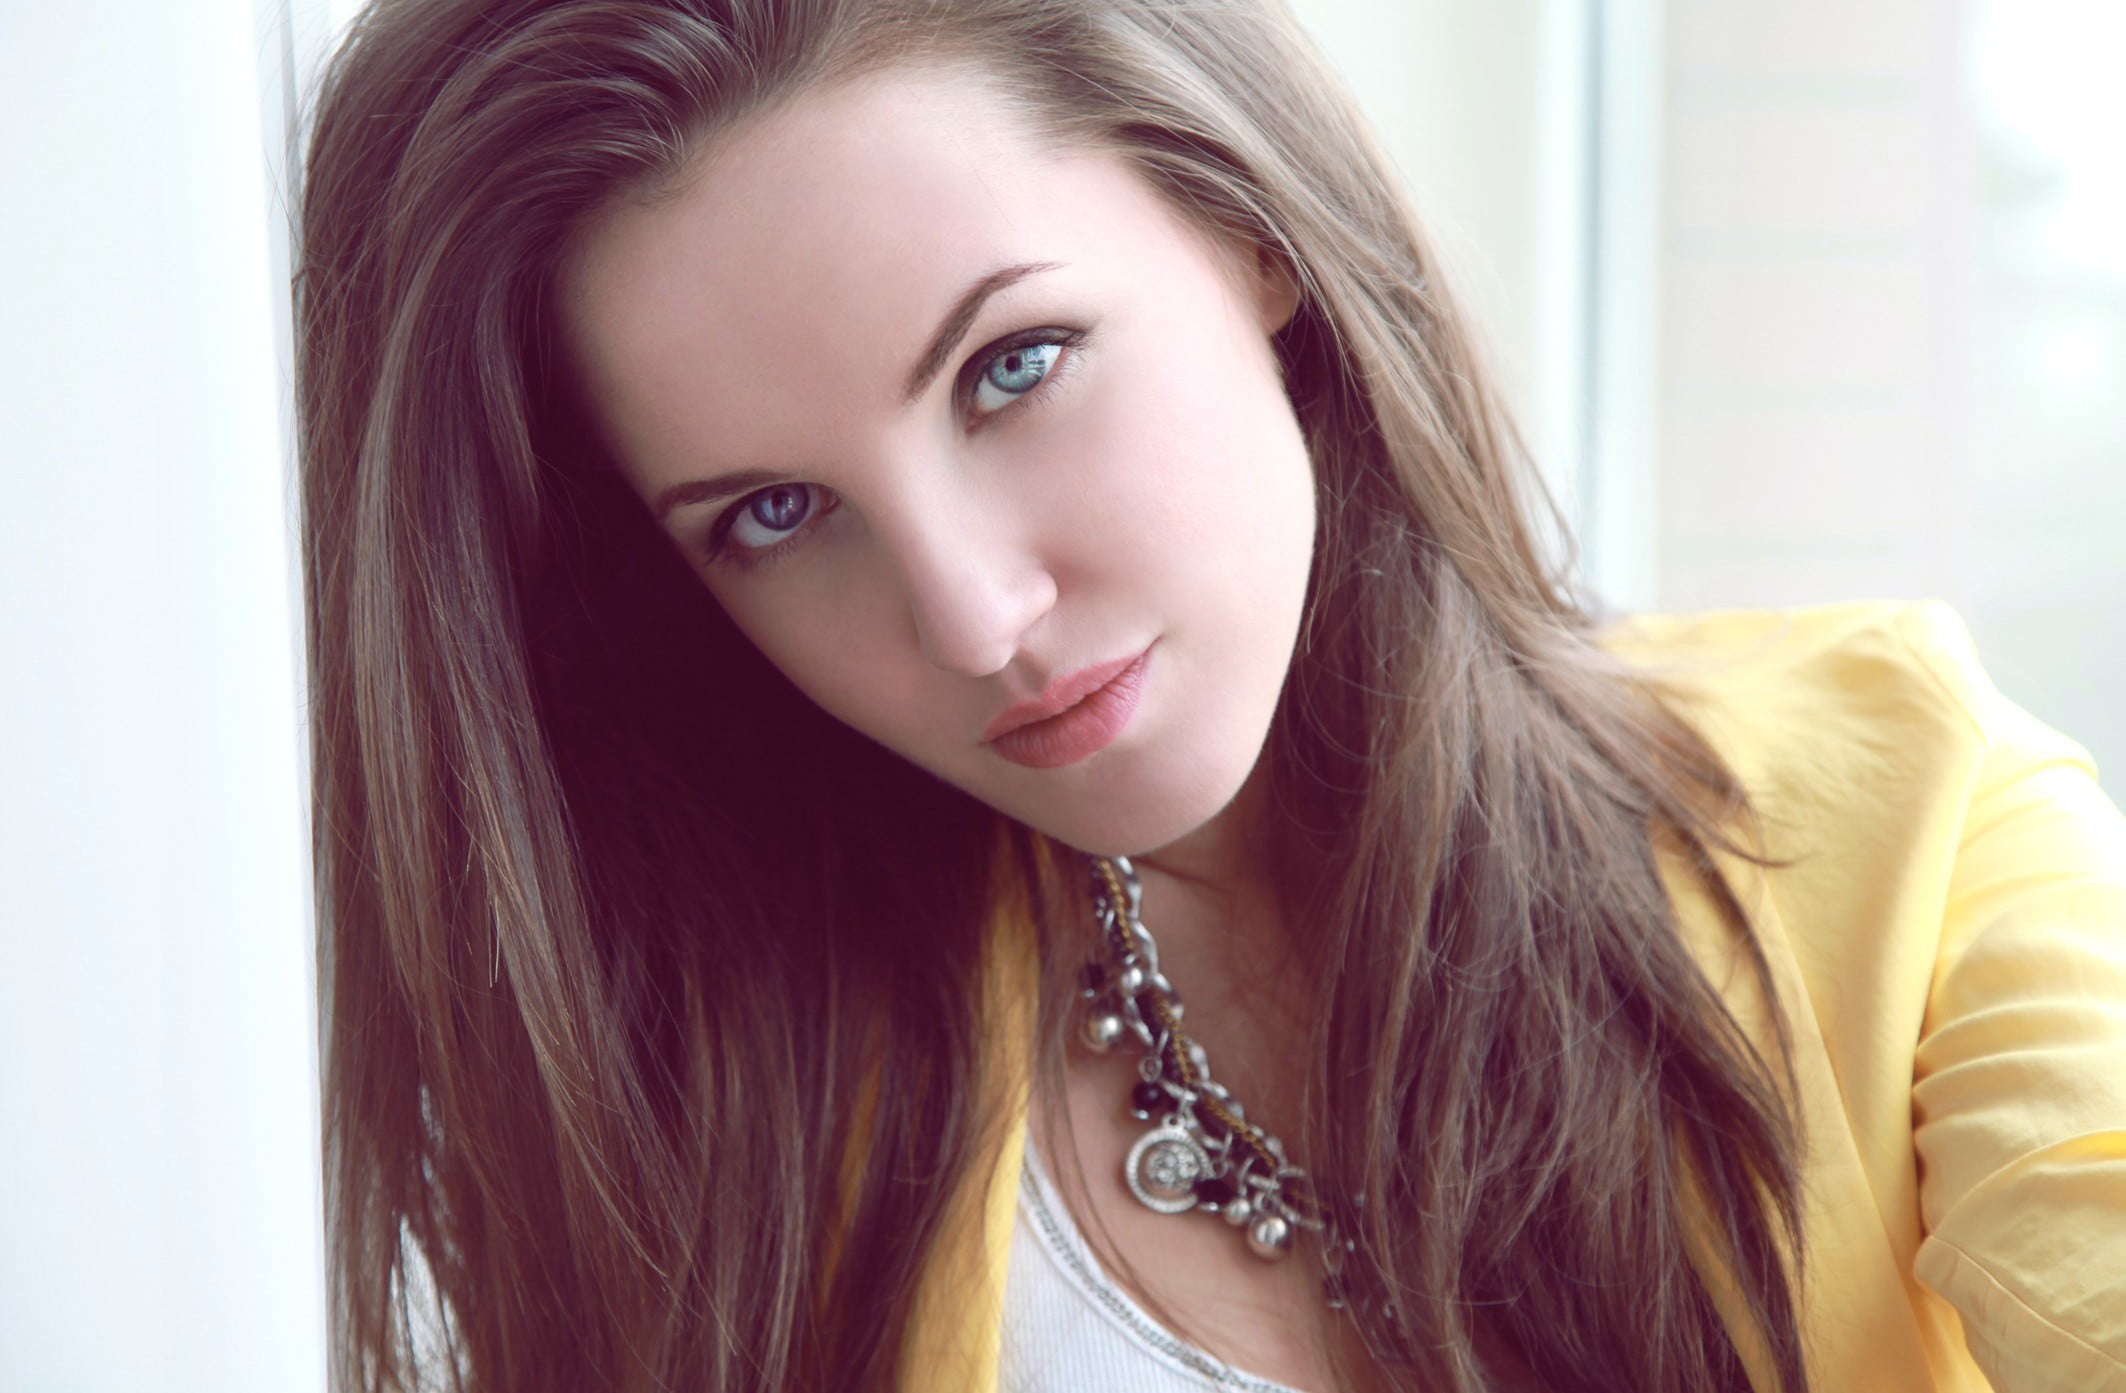 women, Kristina Rodionova, blue eyes, face, portrait, necklace